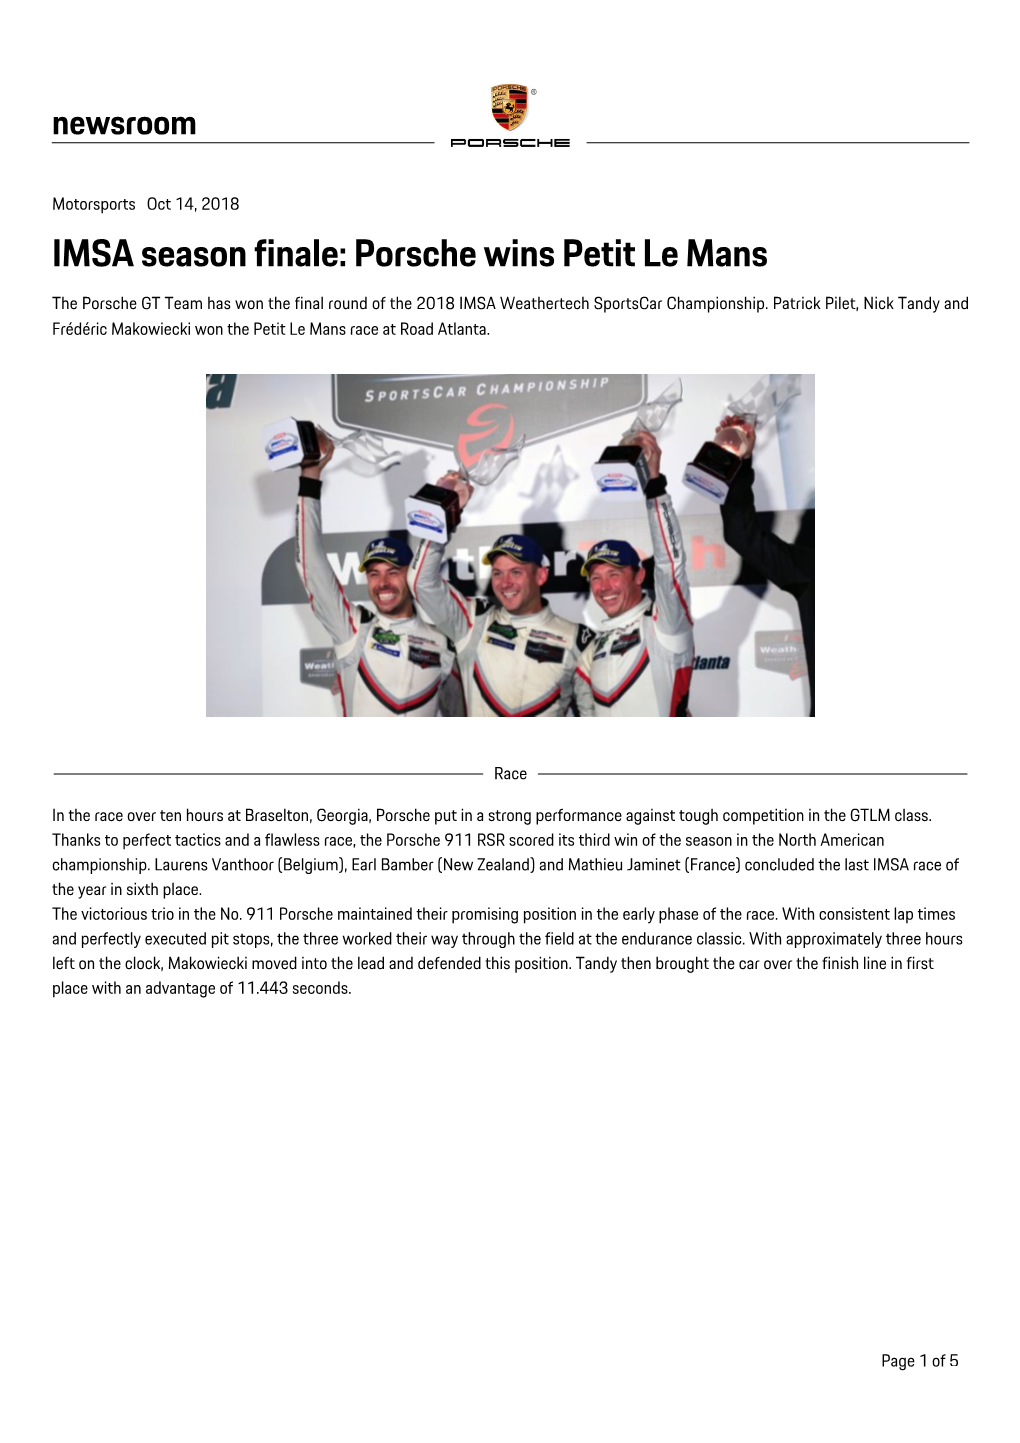 IMSA Season Finale: Porsche Wins Petit Le Mans the Porsche GT Team Has Won the Final Round of the 2018 IMSA Weathertech Sportscar Championship